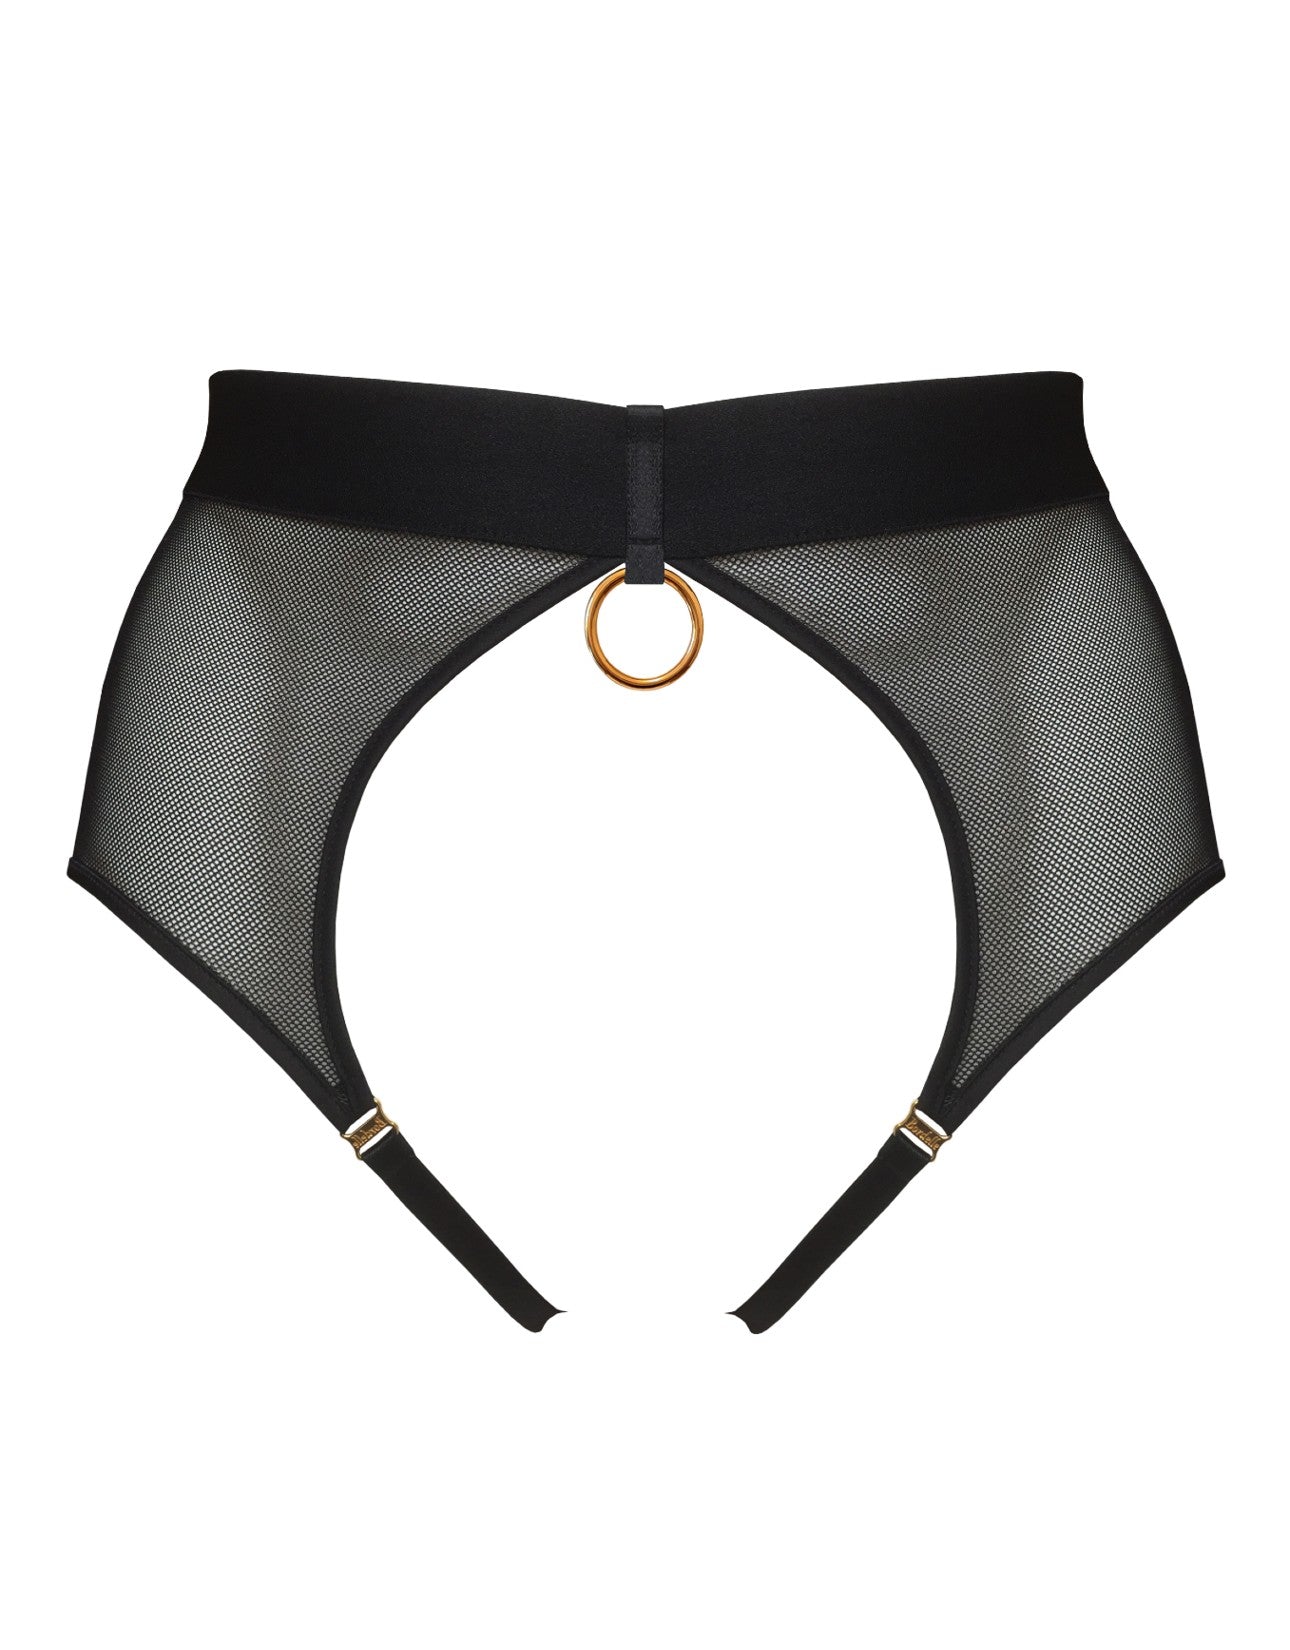 Orly High-Waisted Underwear . Black - Betina Lou